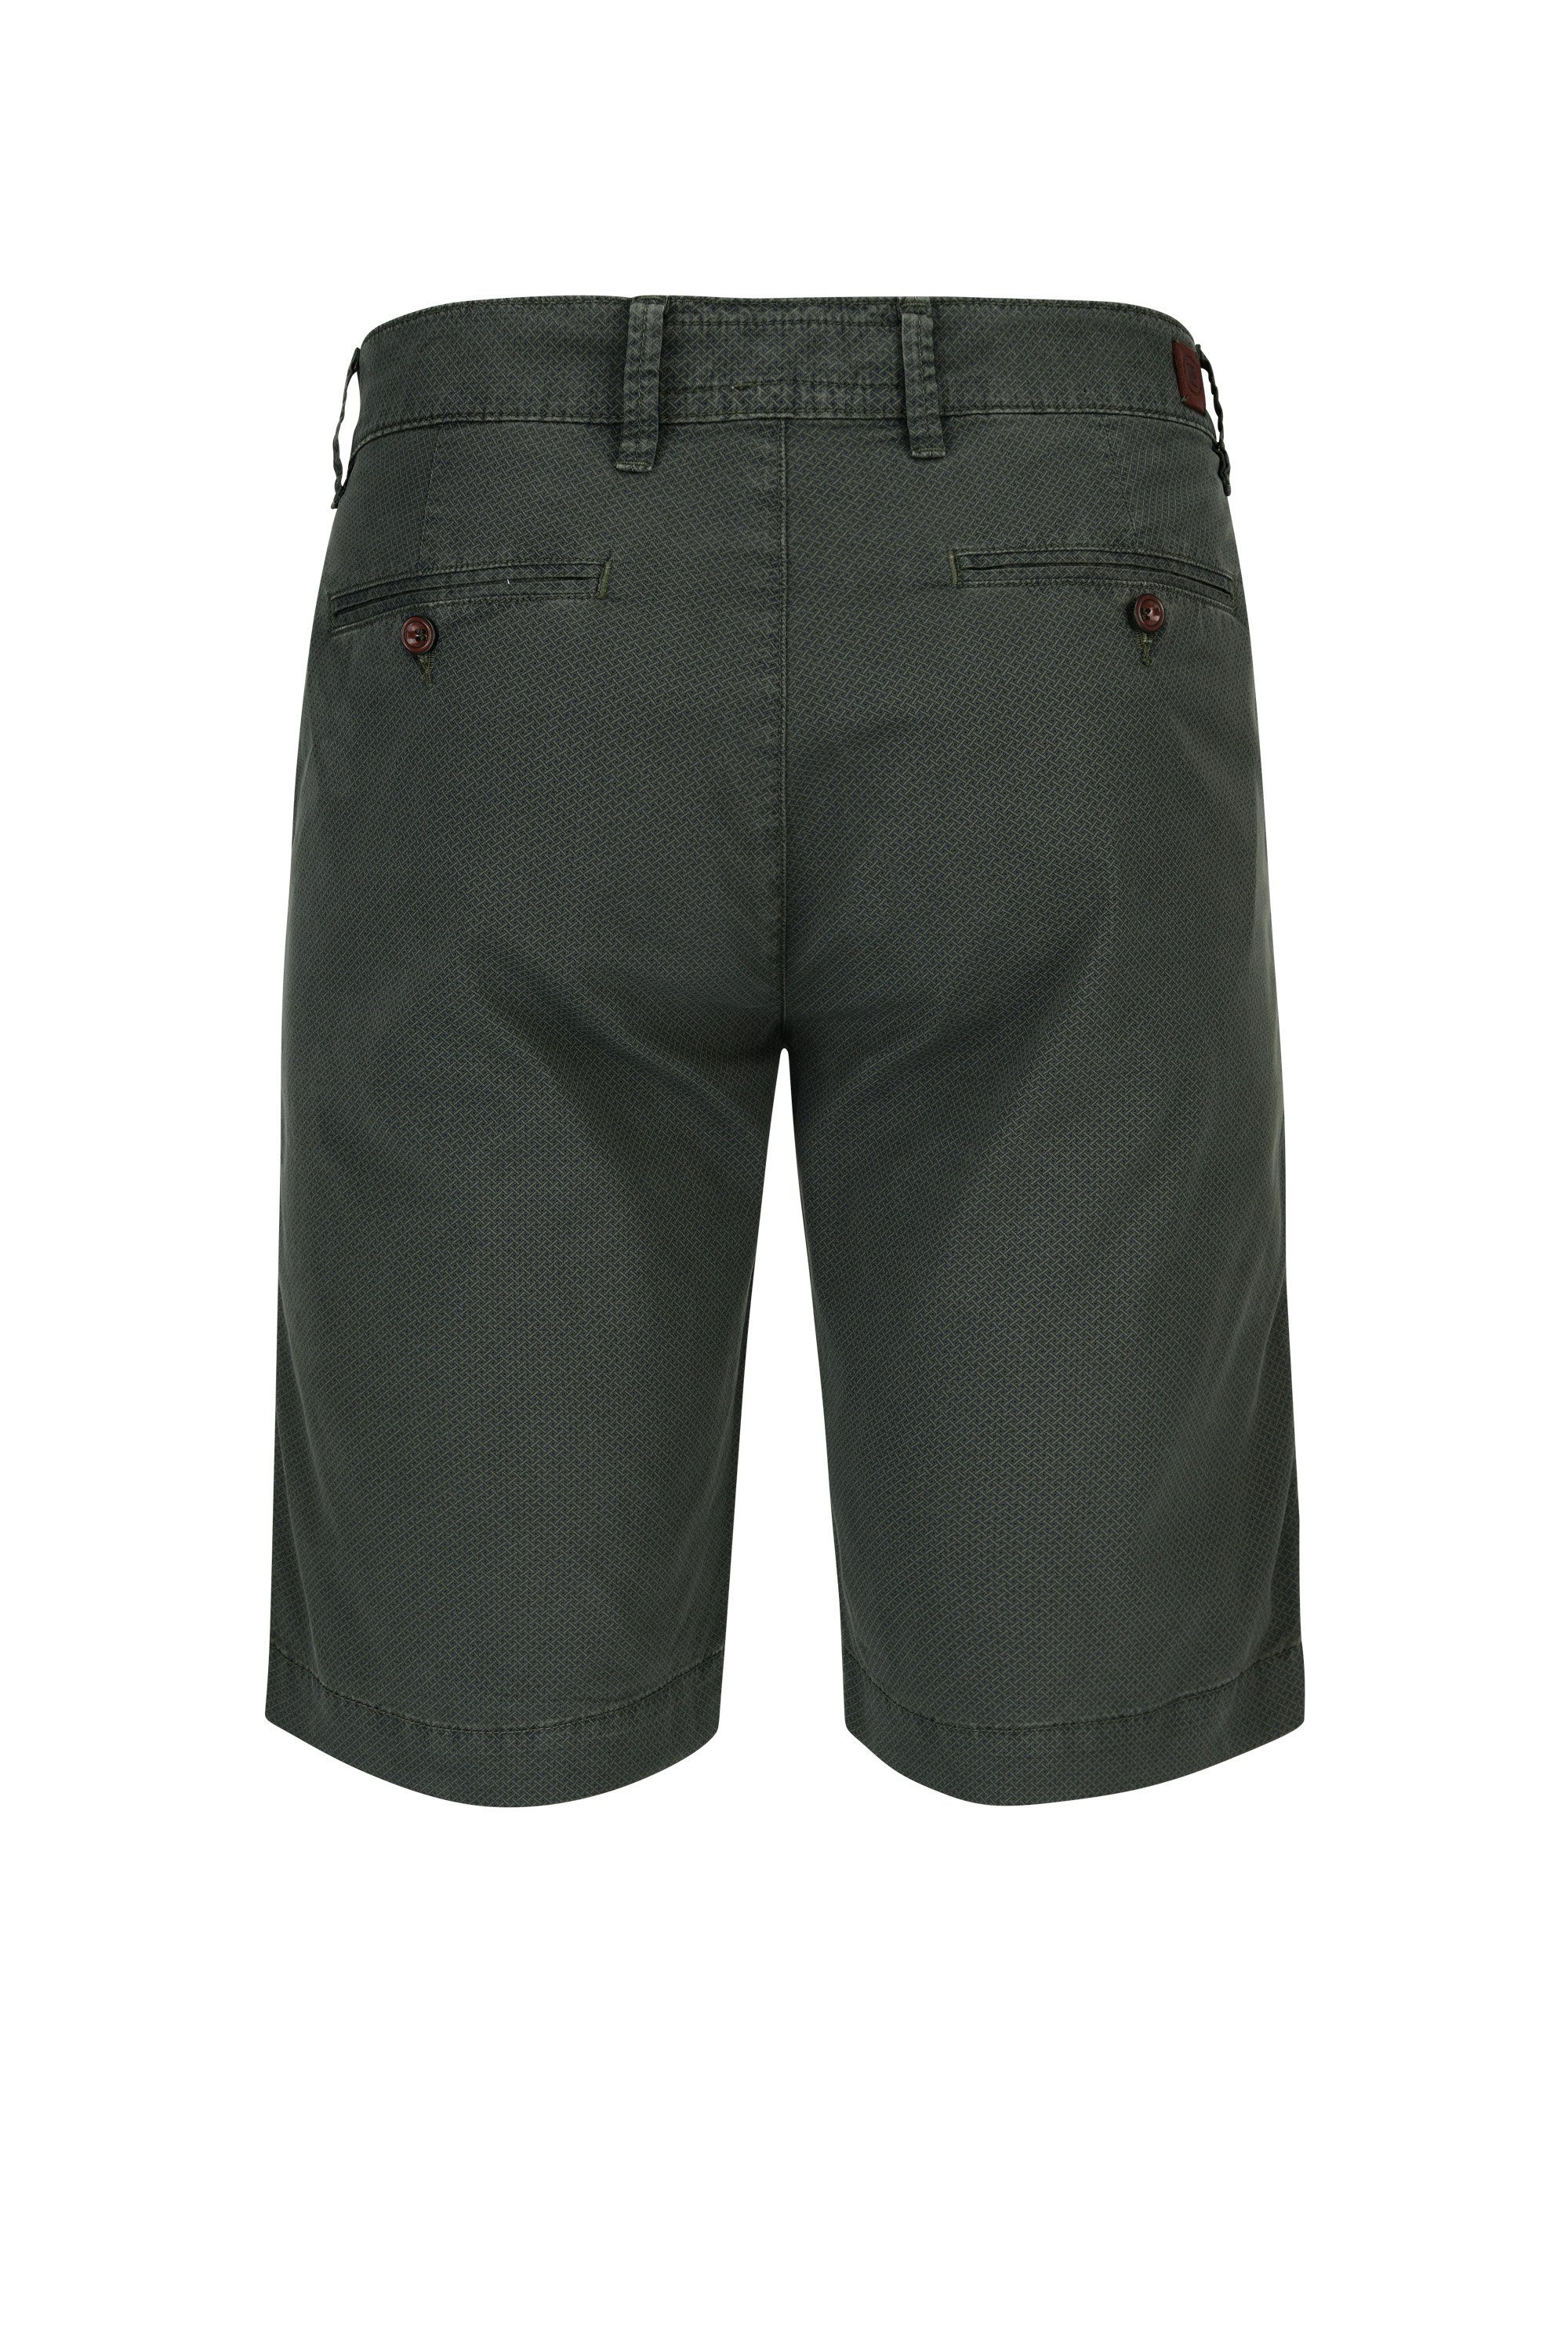 Pierre Cardin green mixed 2060.75 5-Pocket-Jeans 3465 CARDIN SHORTS PIERRE chino LYON